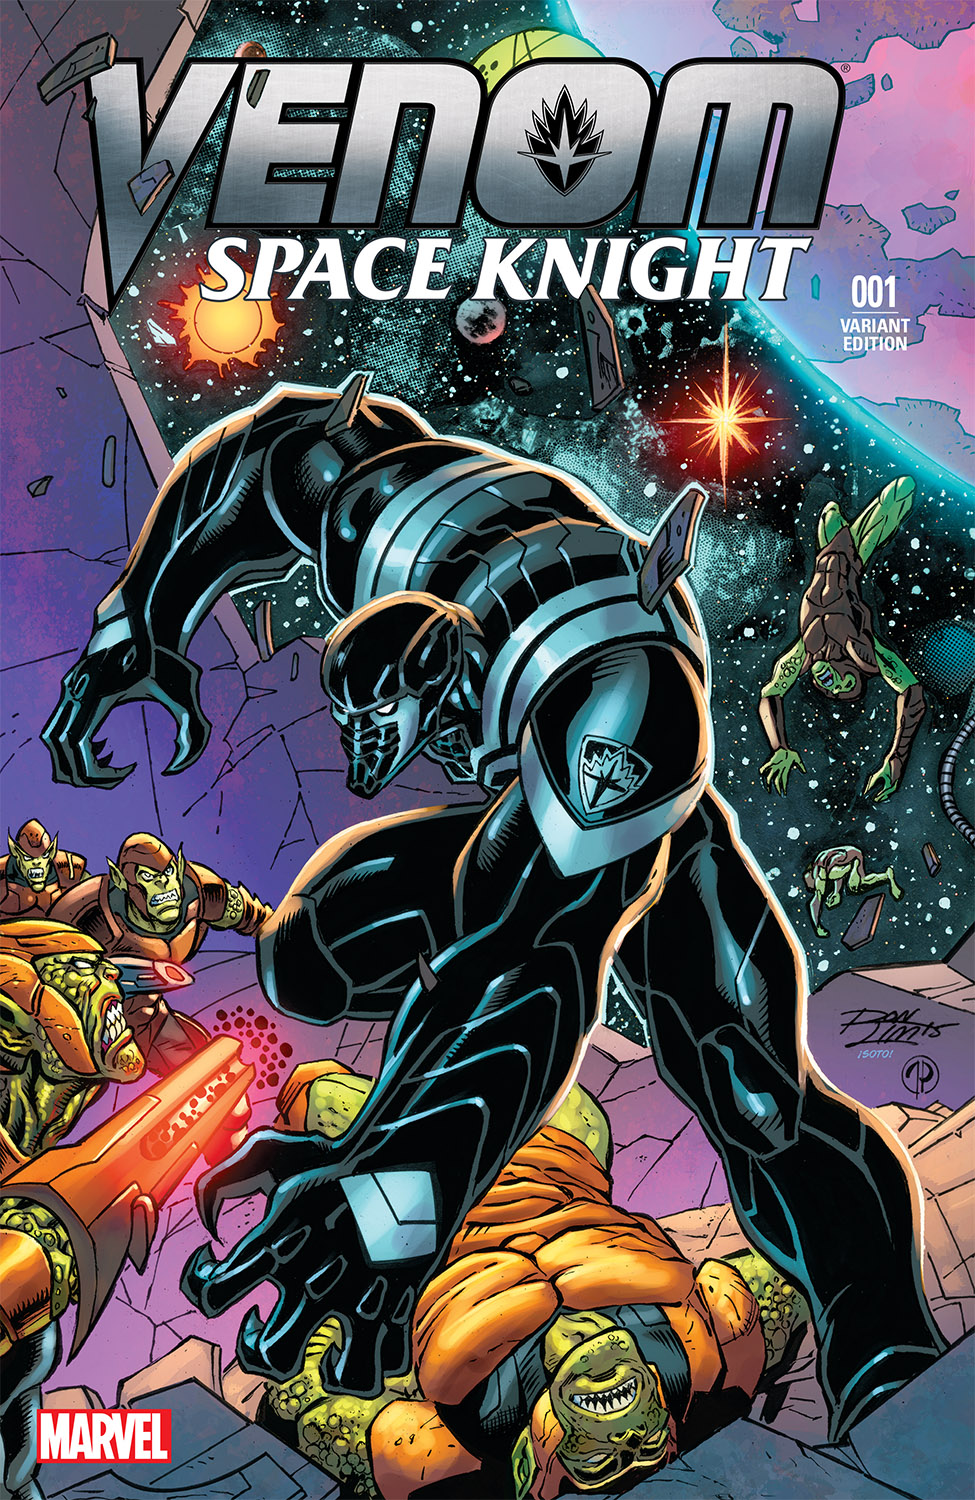 Venom: Space Knight (2015) #1 (Lim Variant)